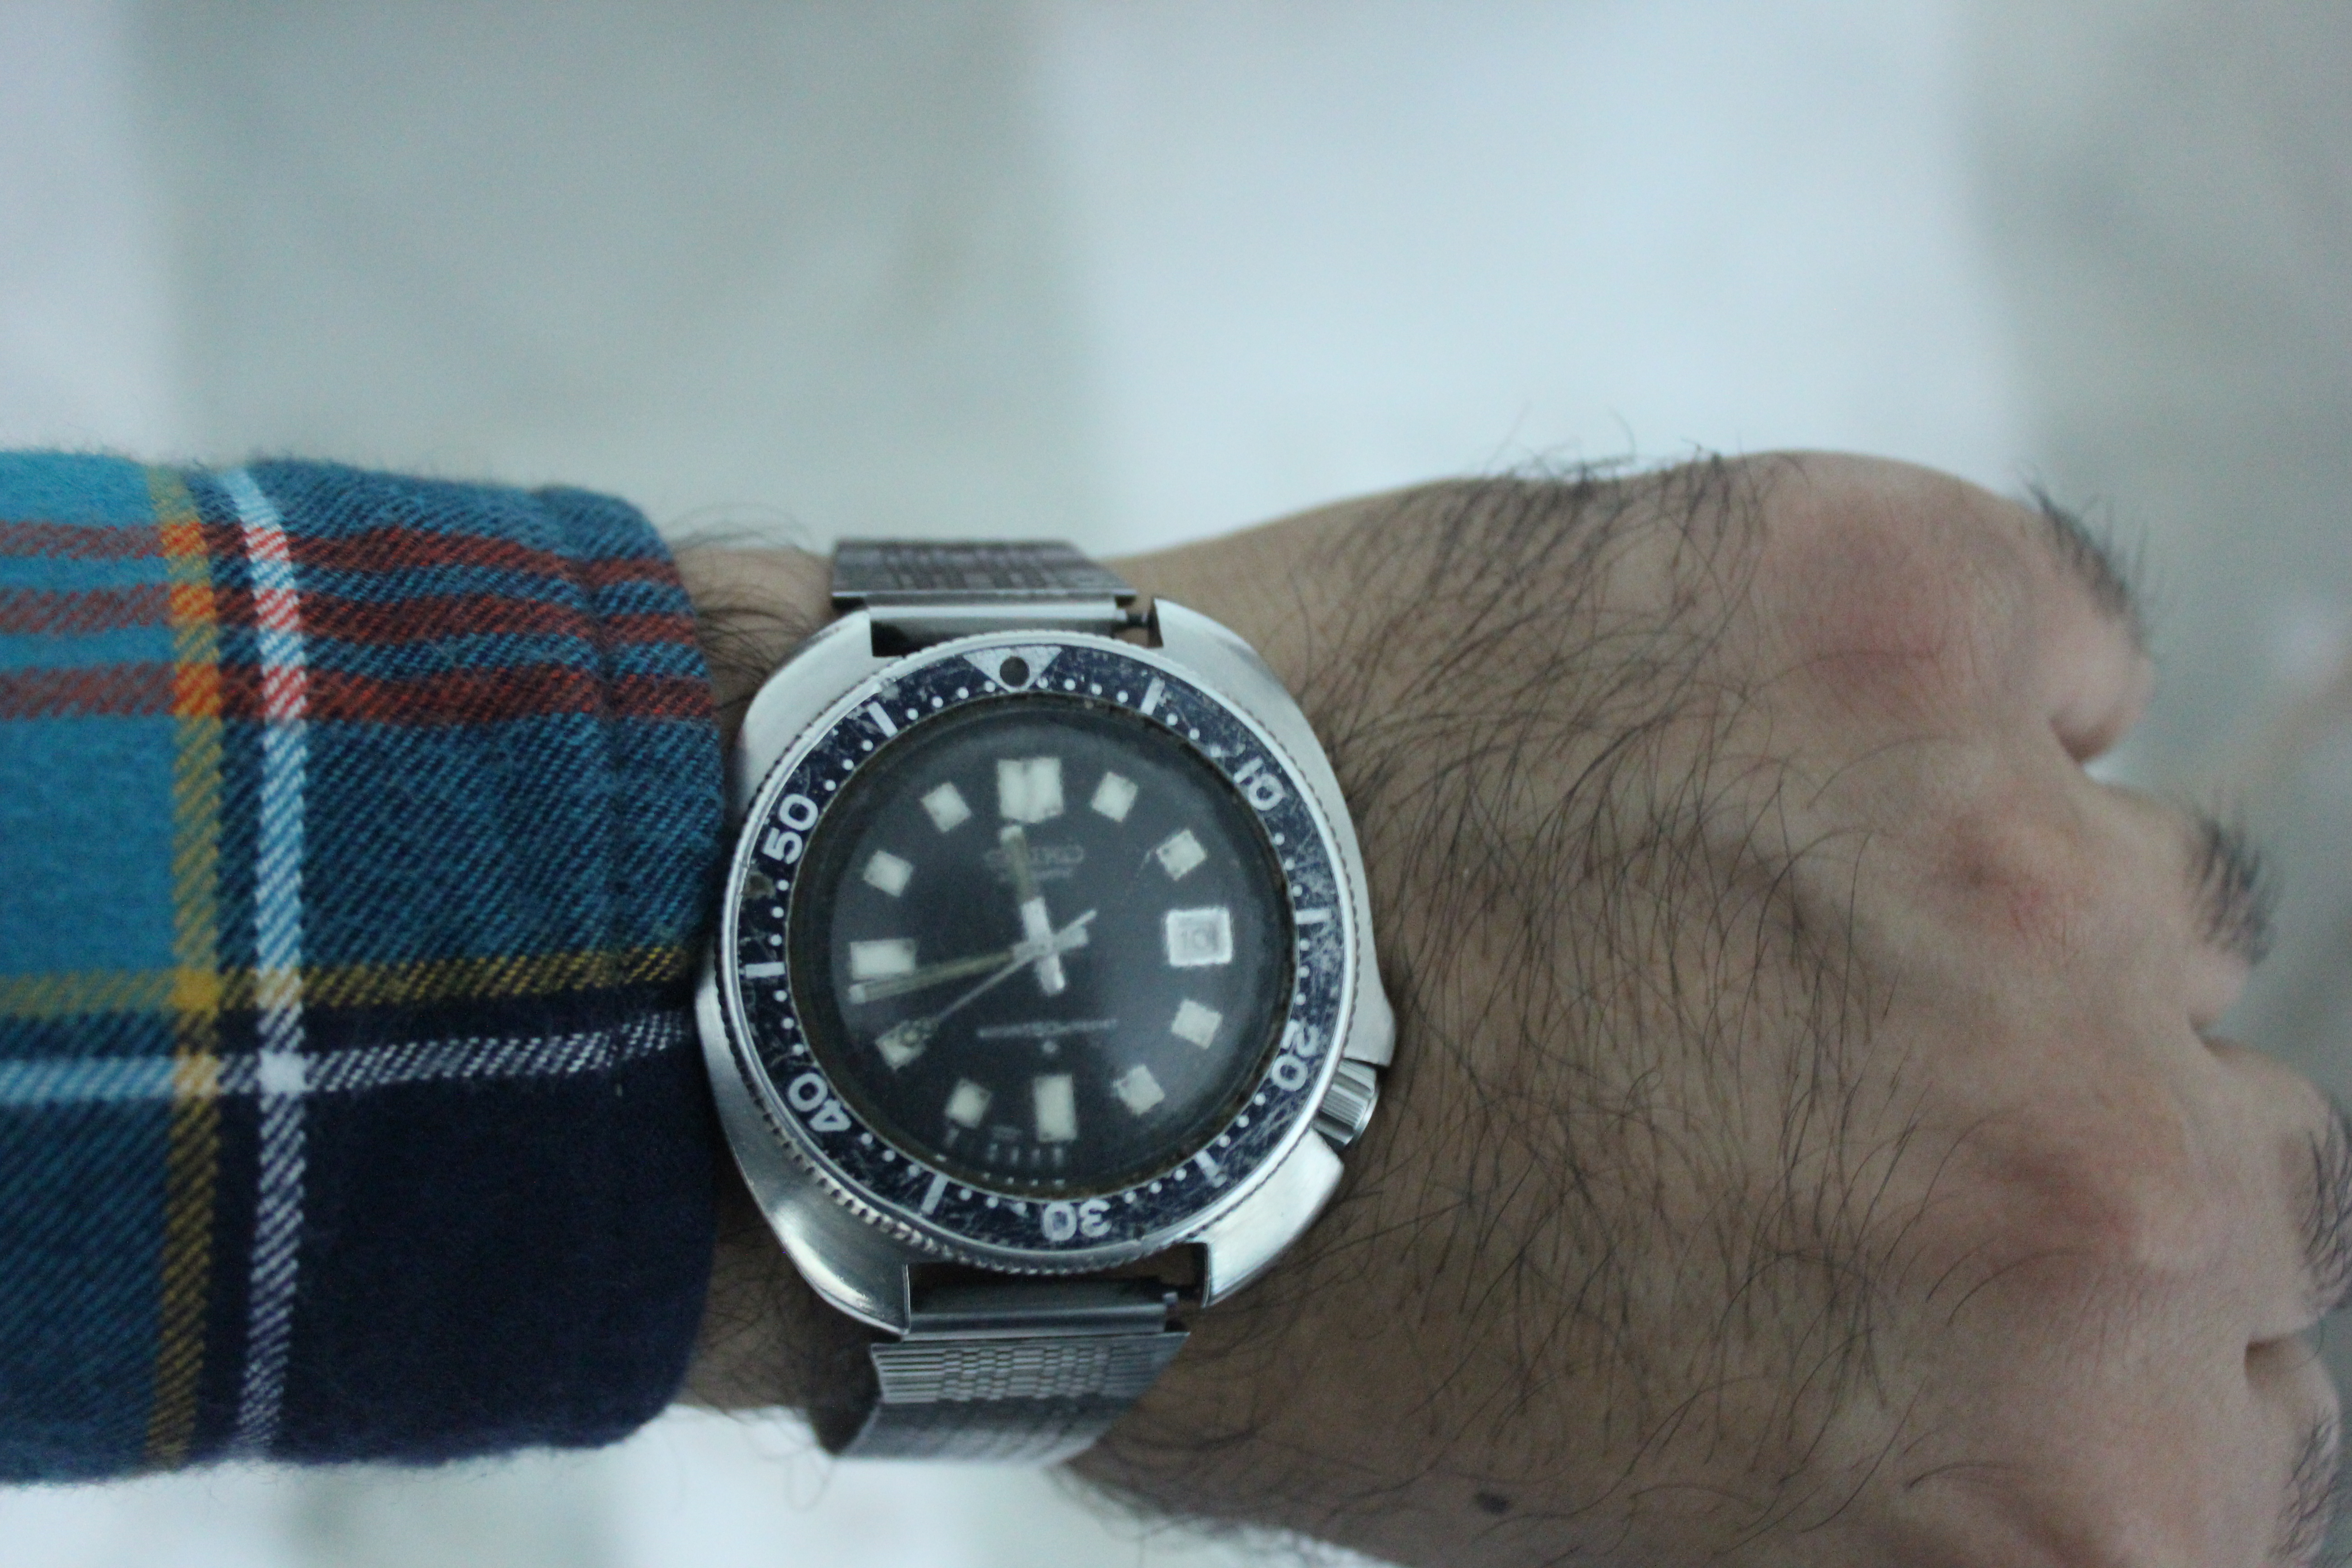 Seiko 6105-8110 Diver Watch Review